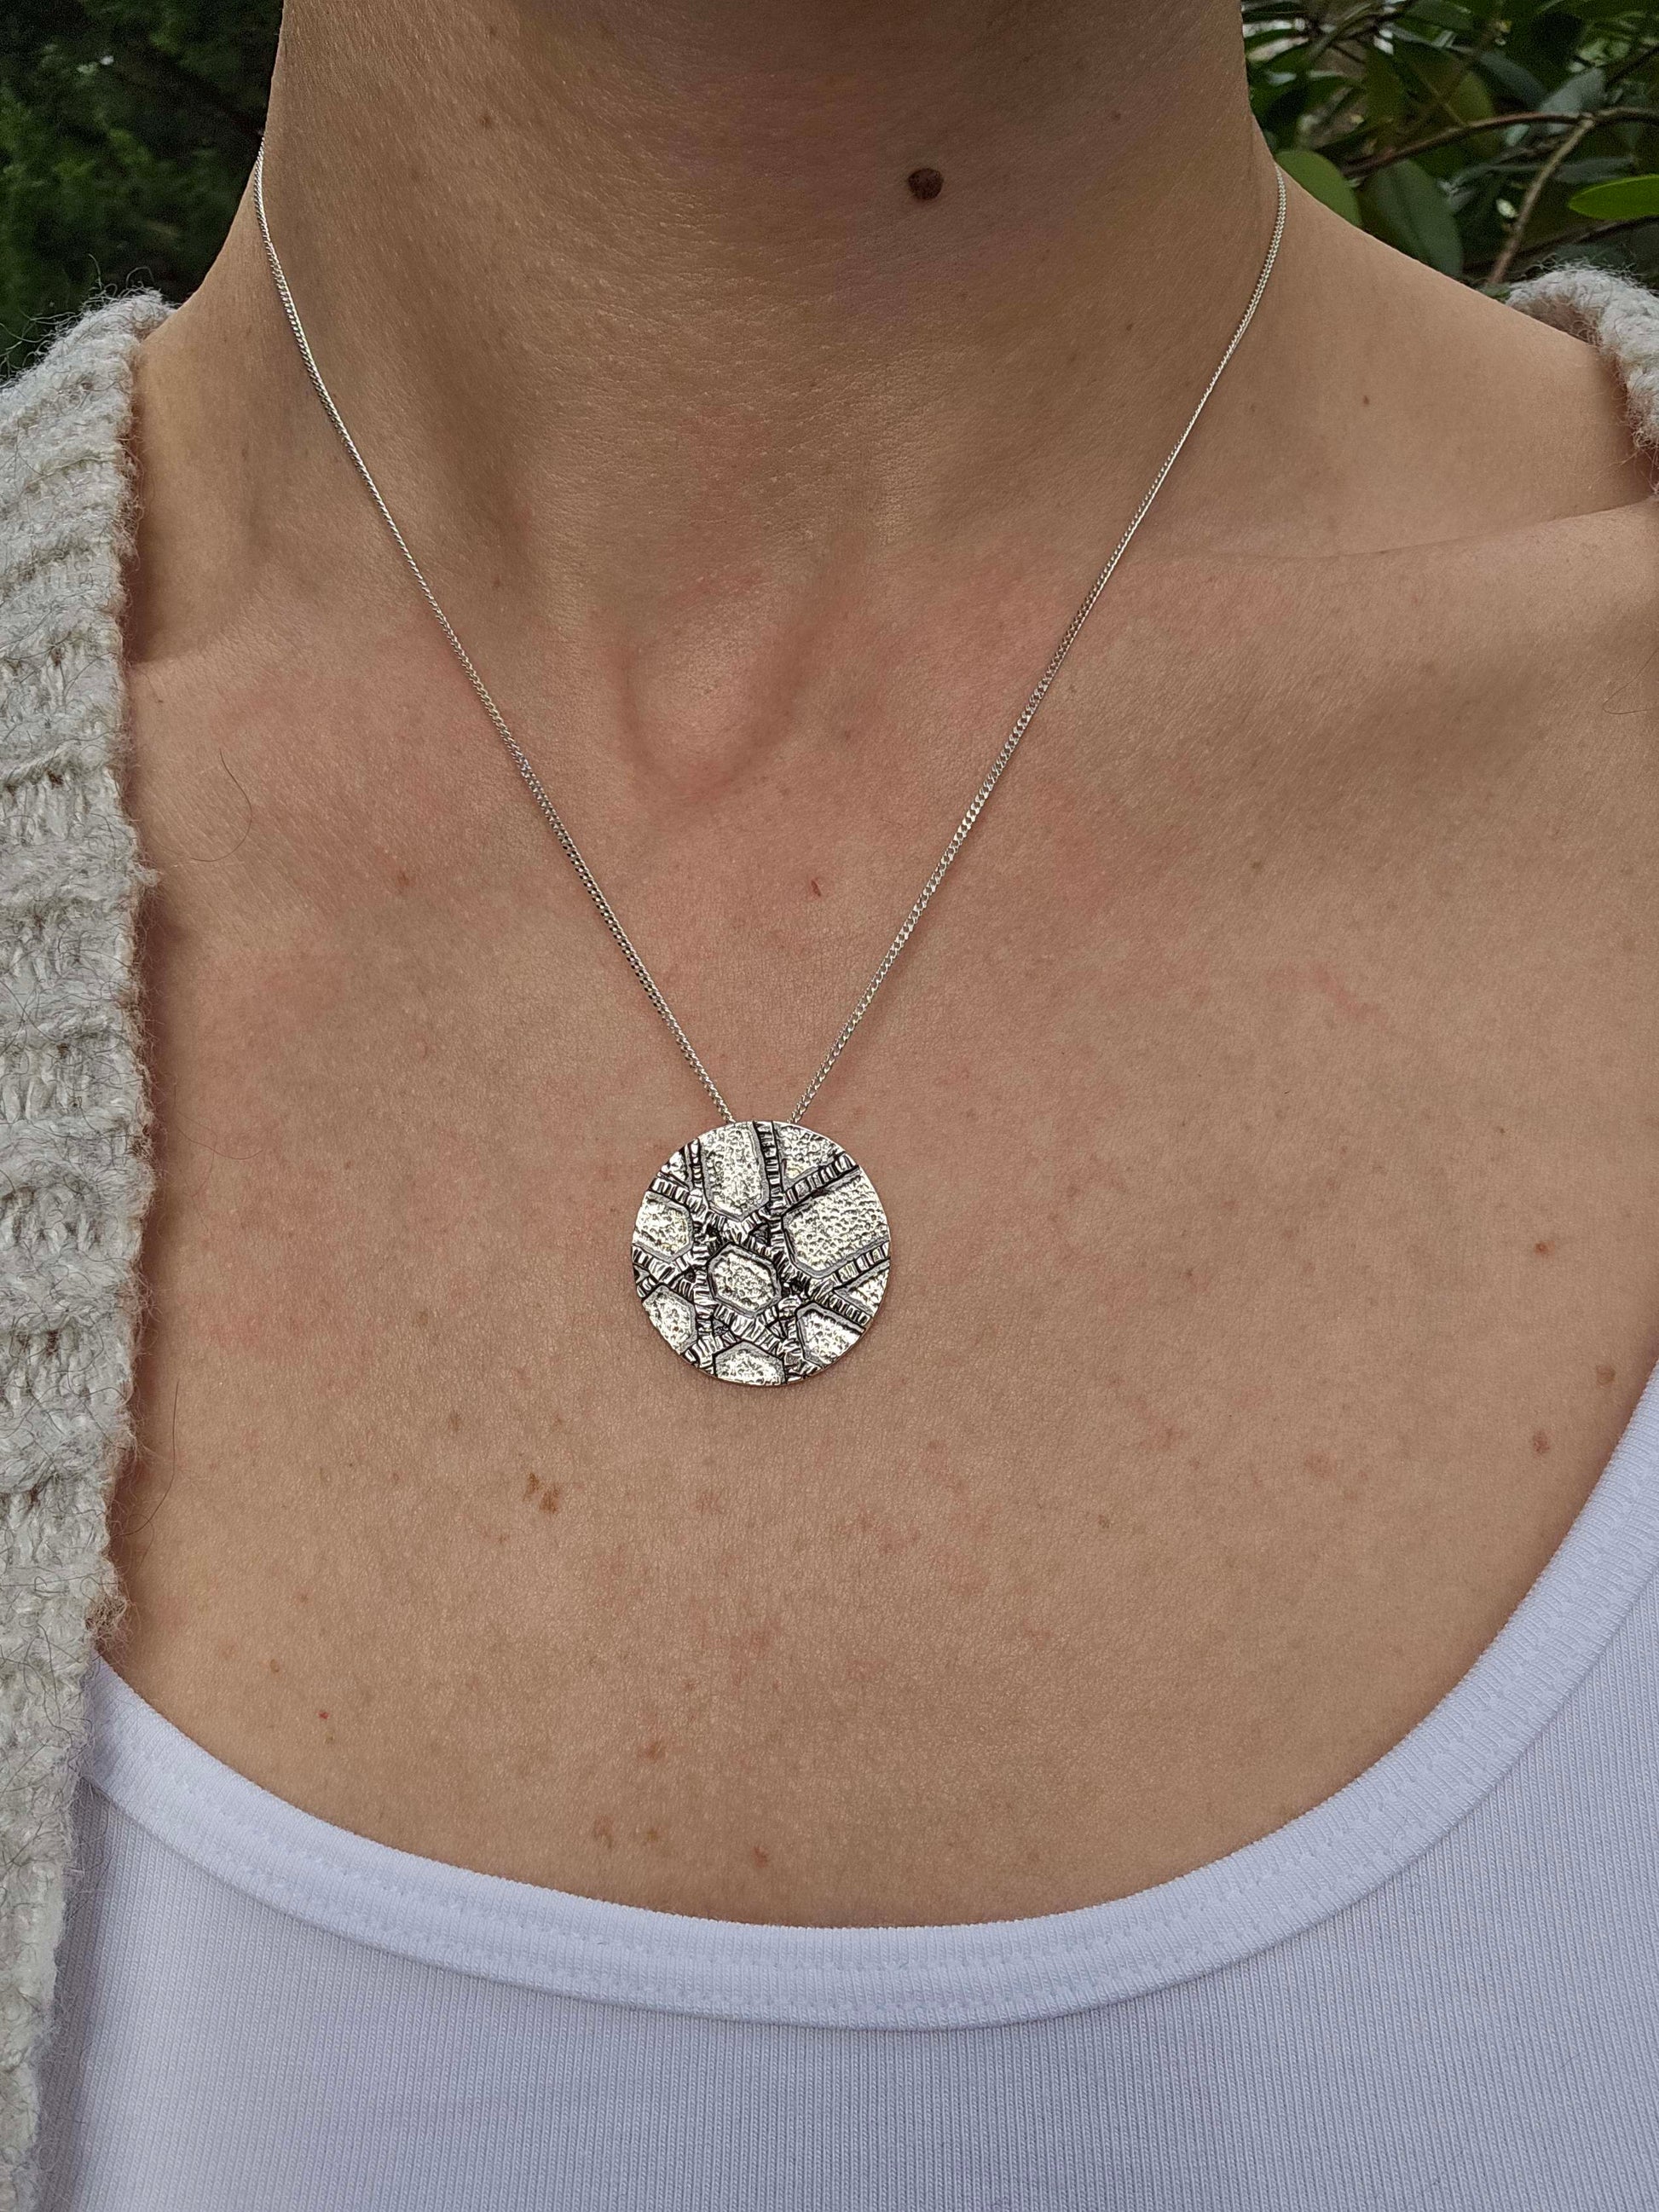 Unique Sterling Silver Jewish Star necklace 